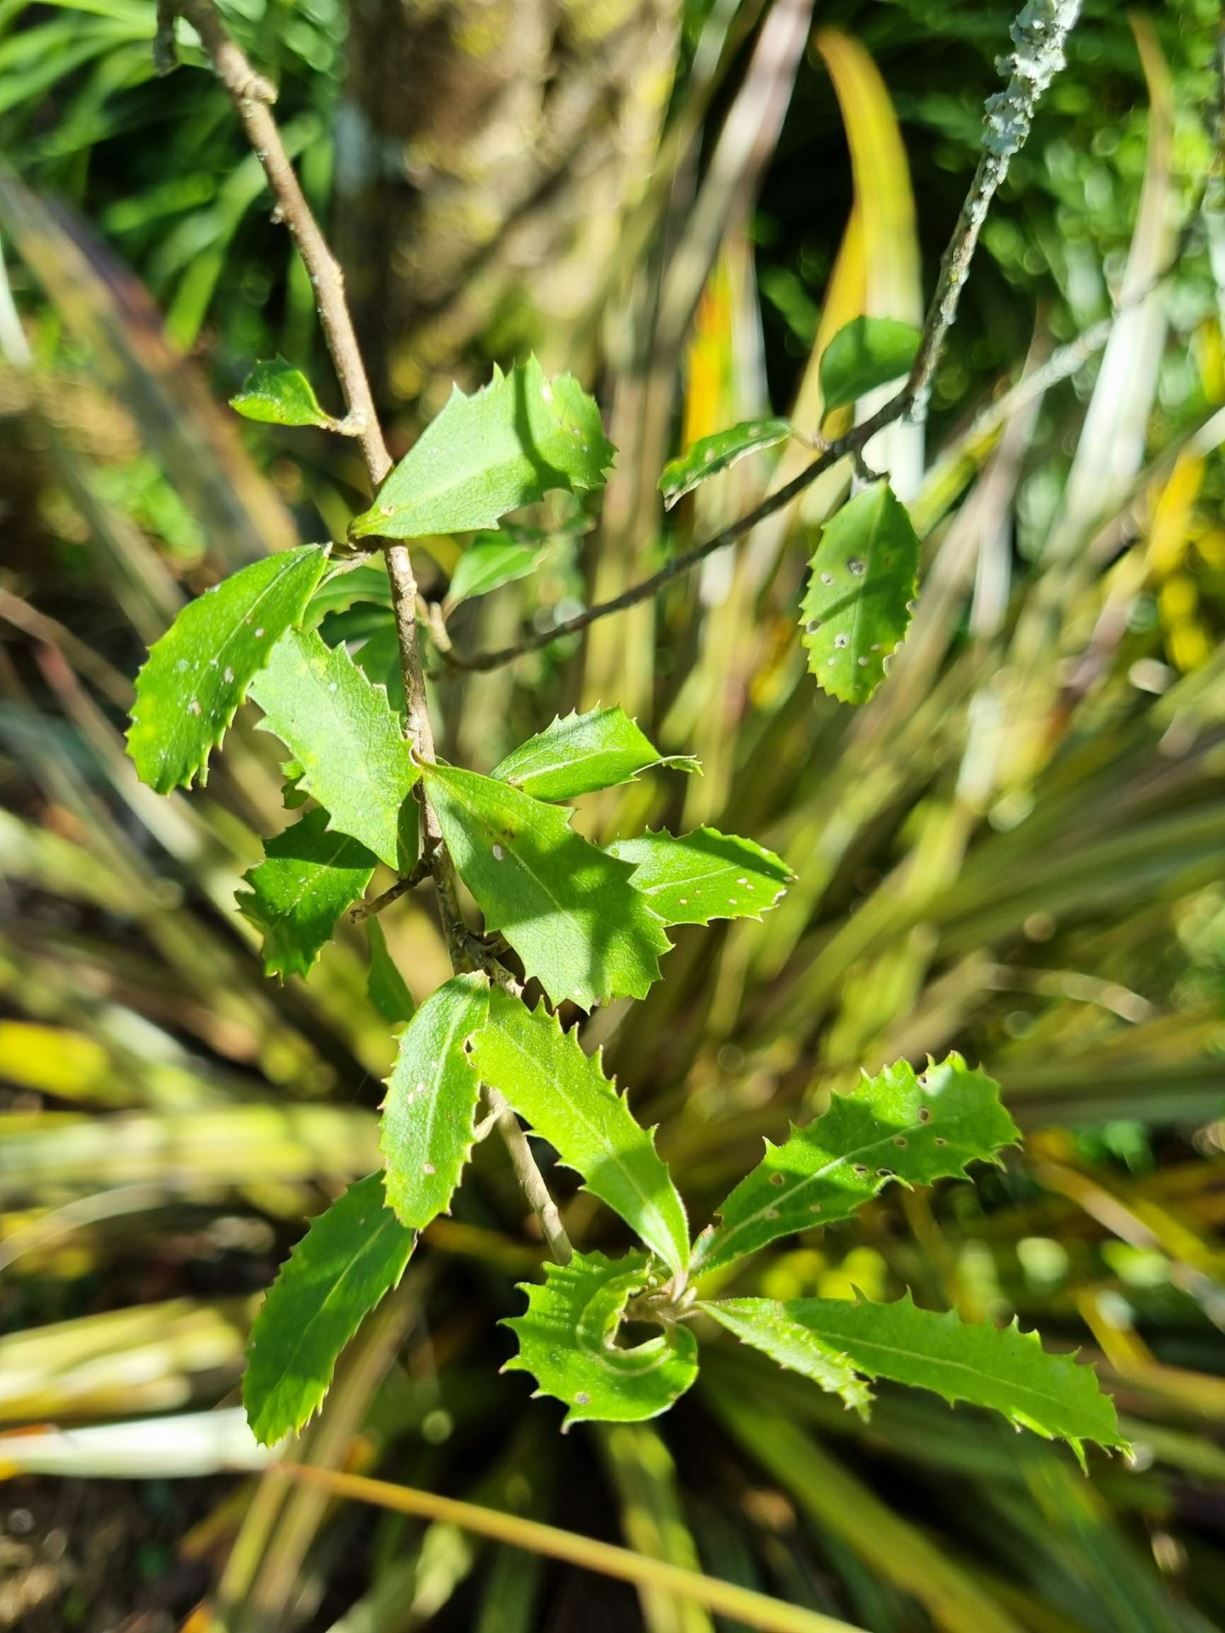 Hoheria angustifolia - narrow-leaved lacebark, hungere, houhi puruhi